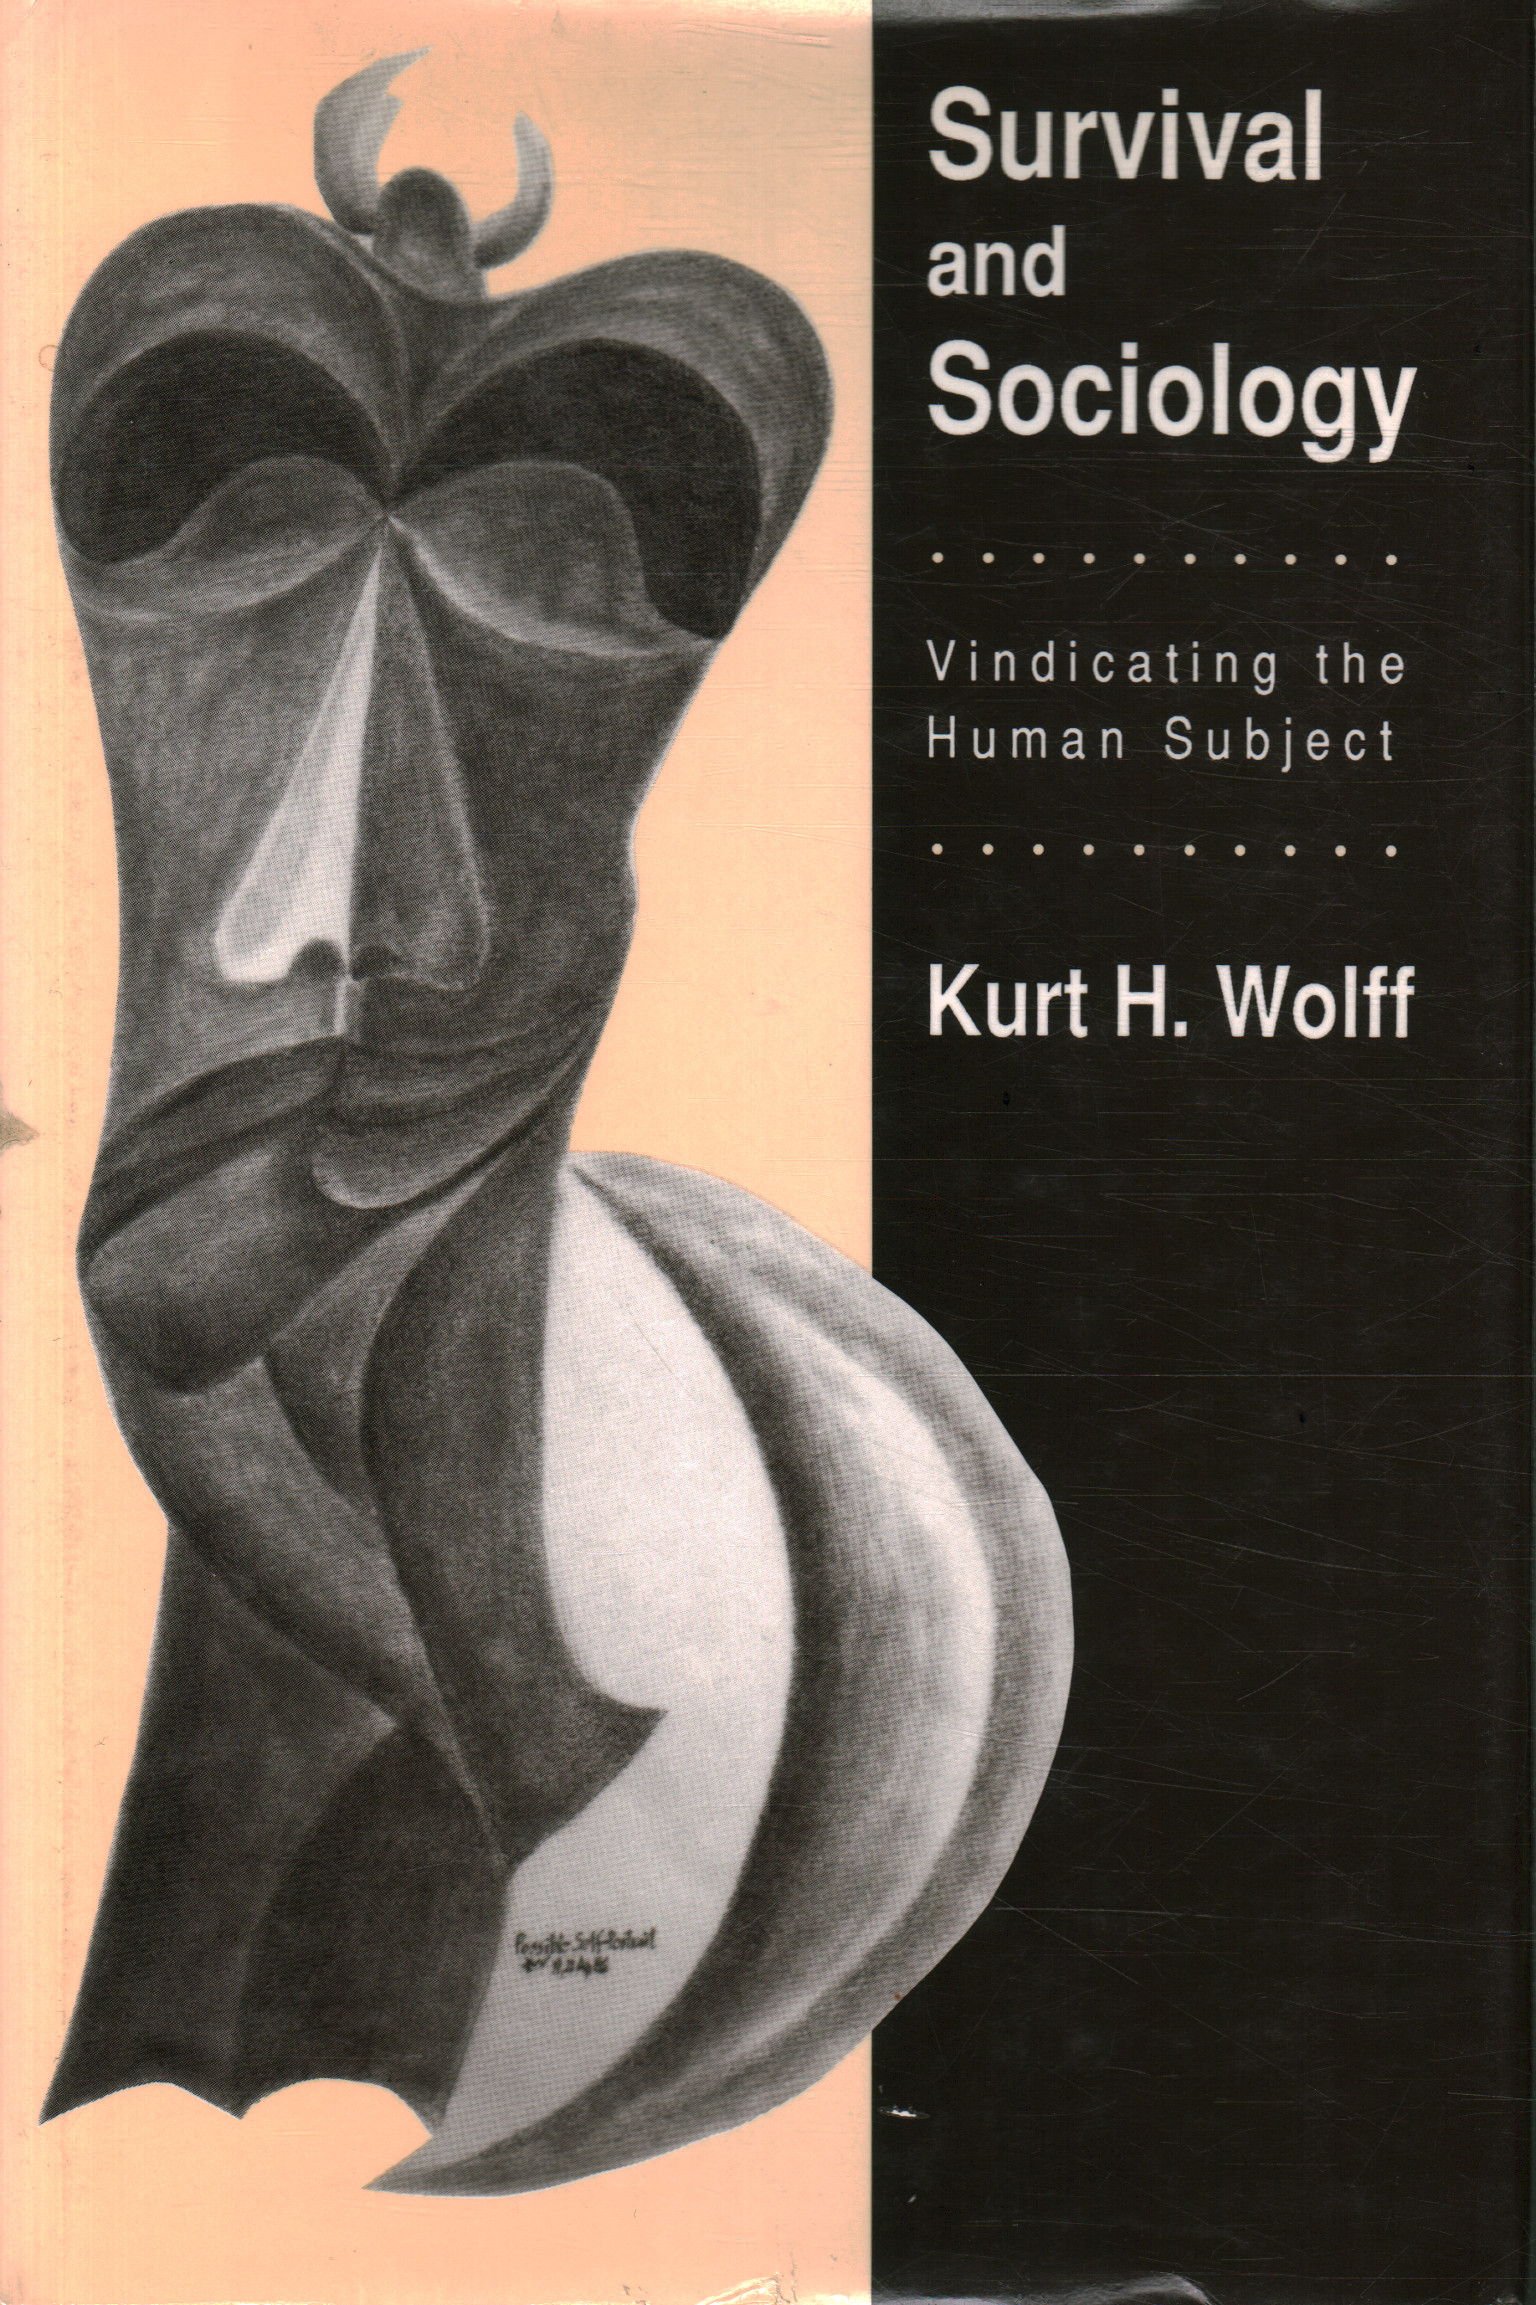 Survie et sociologie